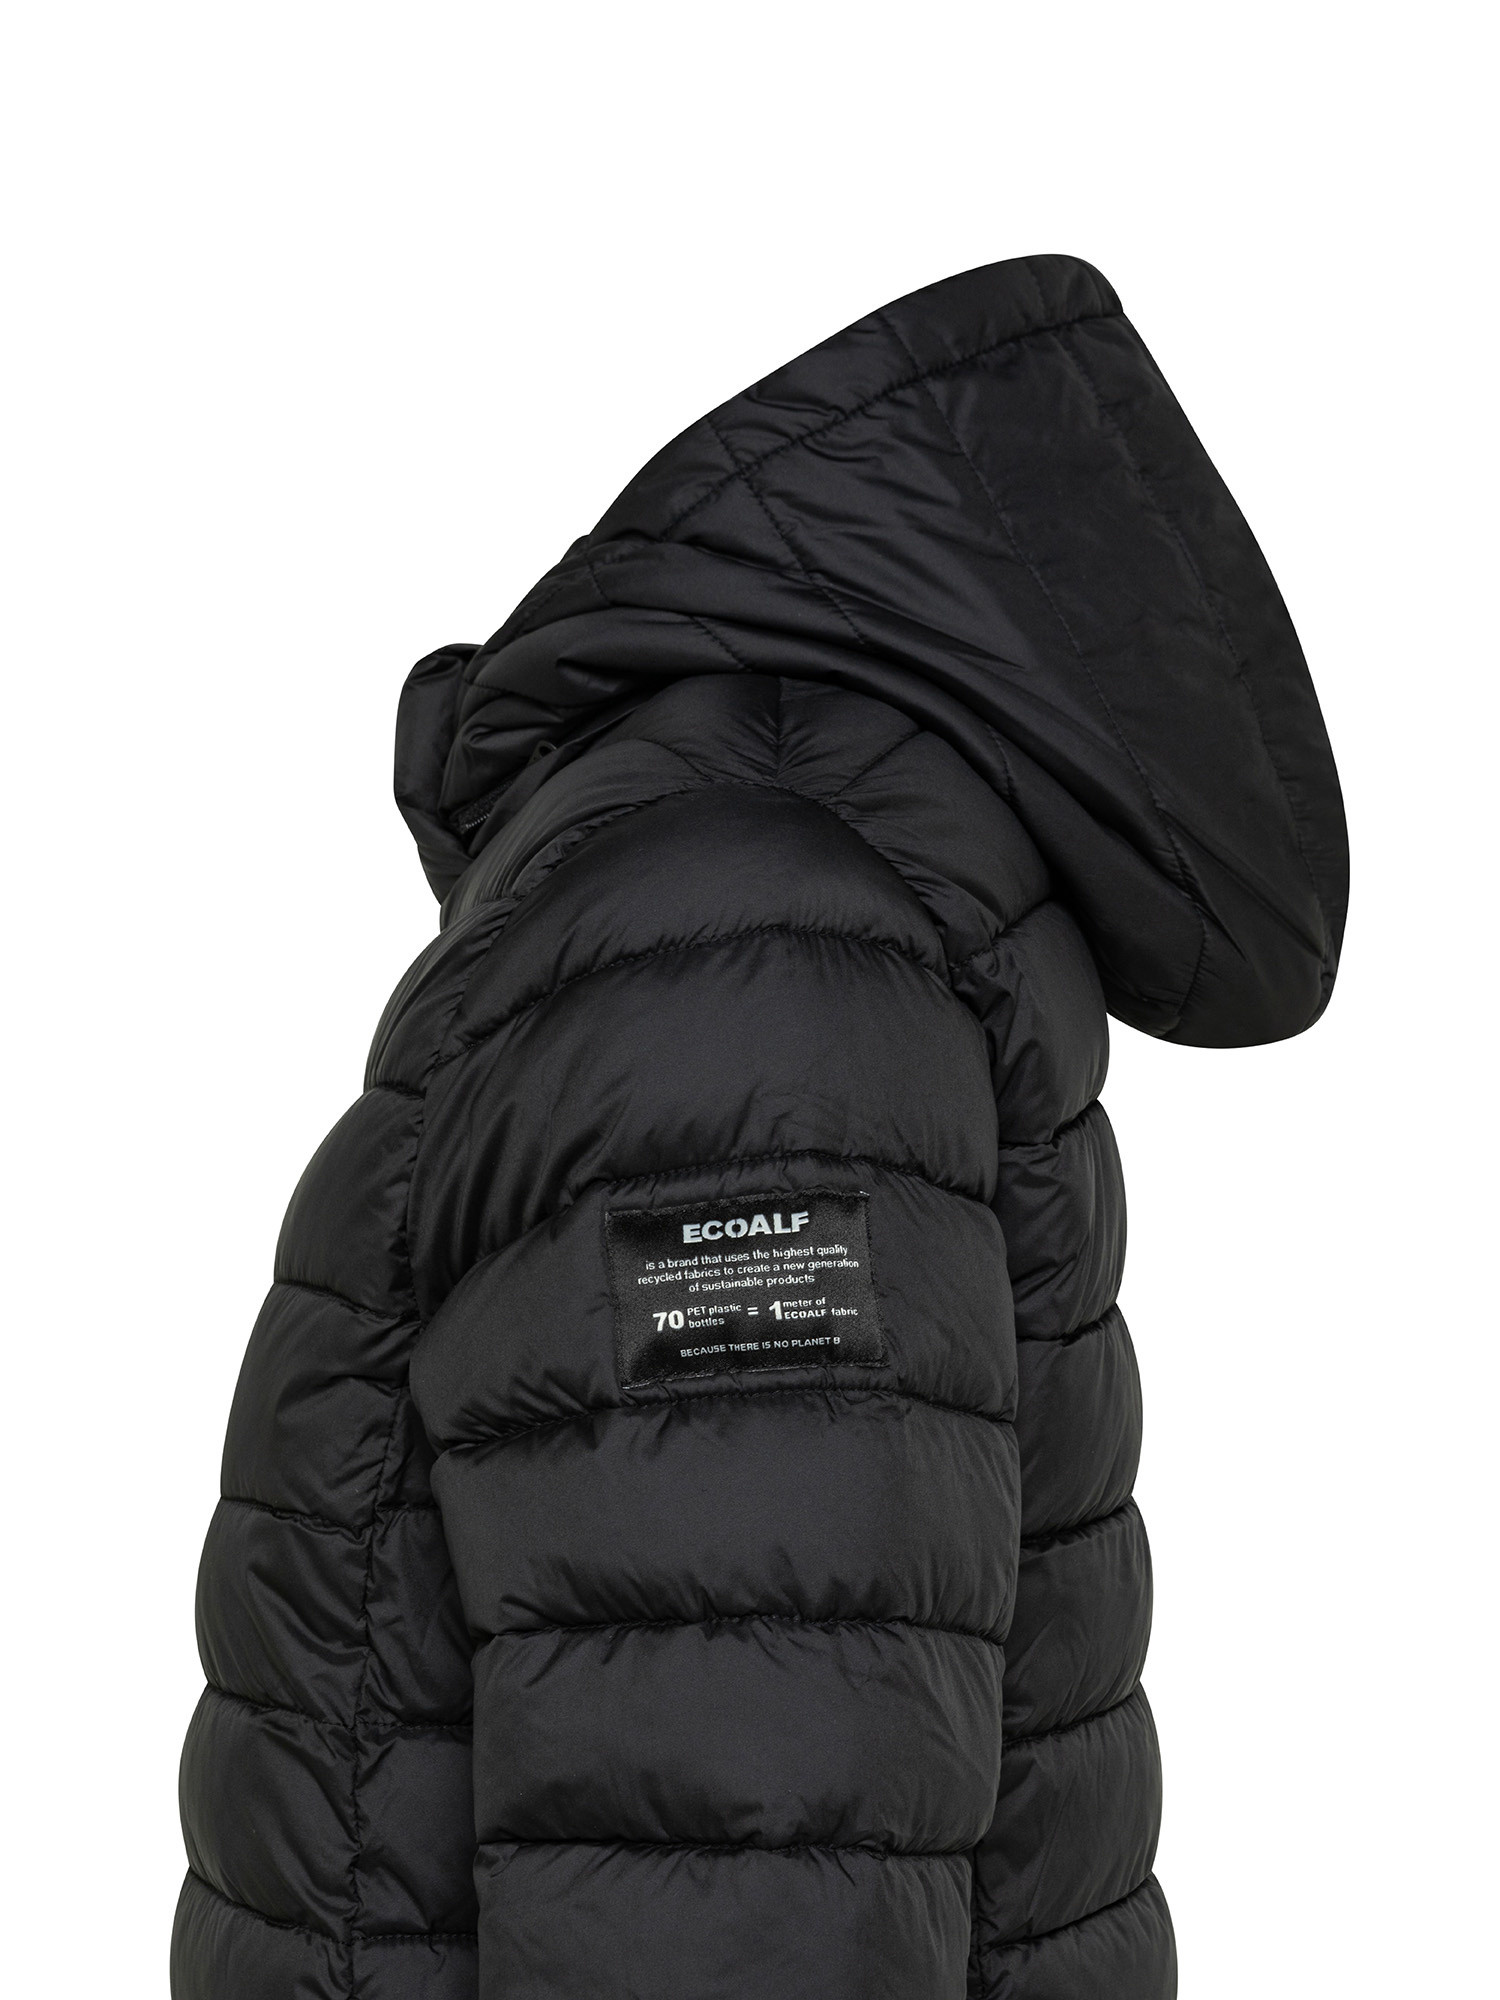 Ecoalf - Cronulla waterproof three-quarter down jacket, Black, large image number 2